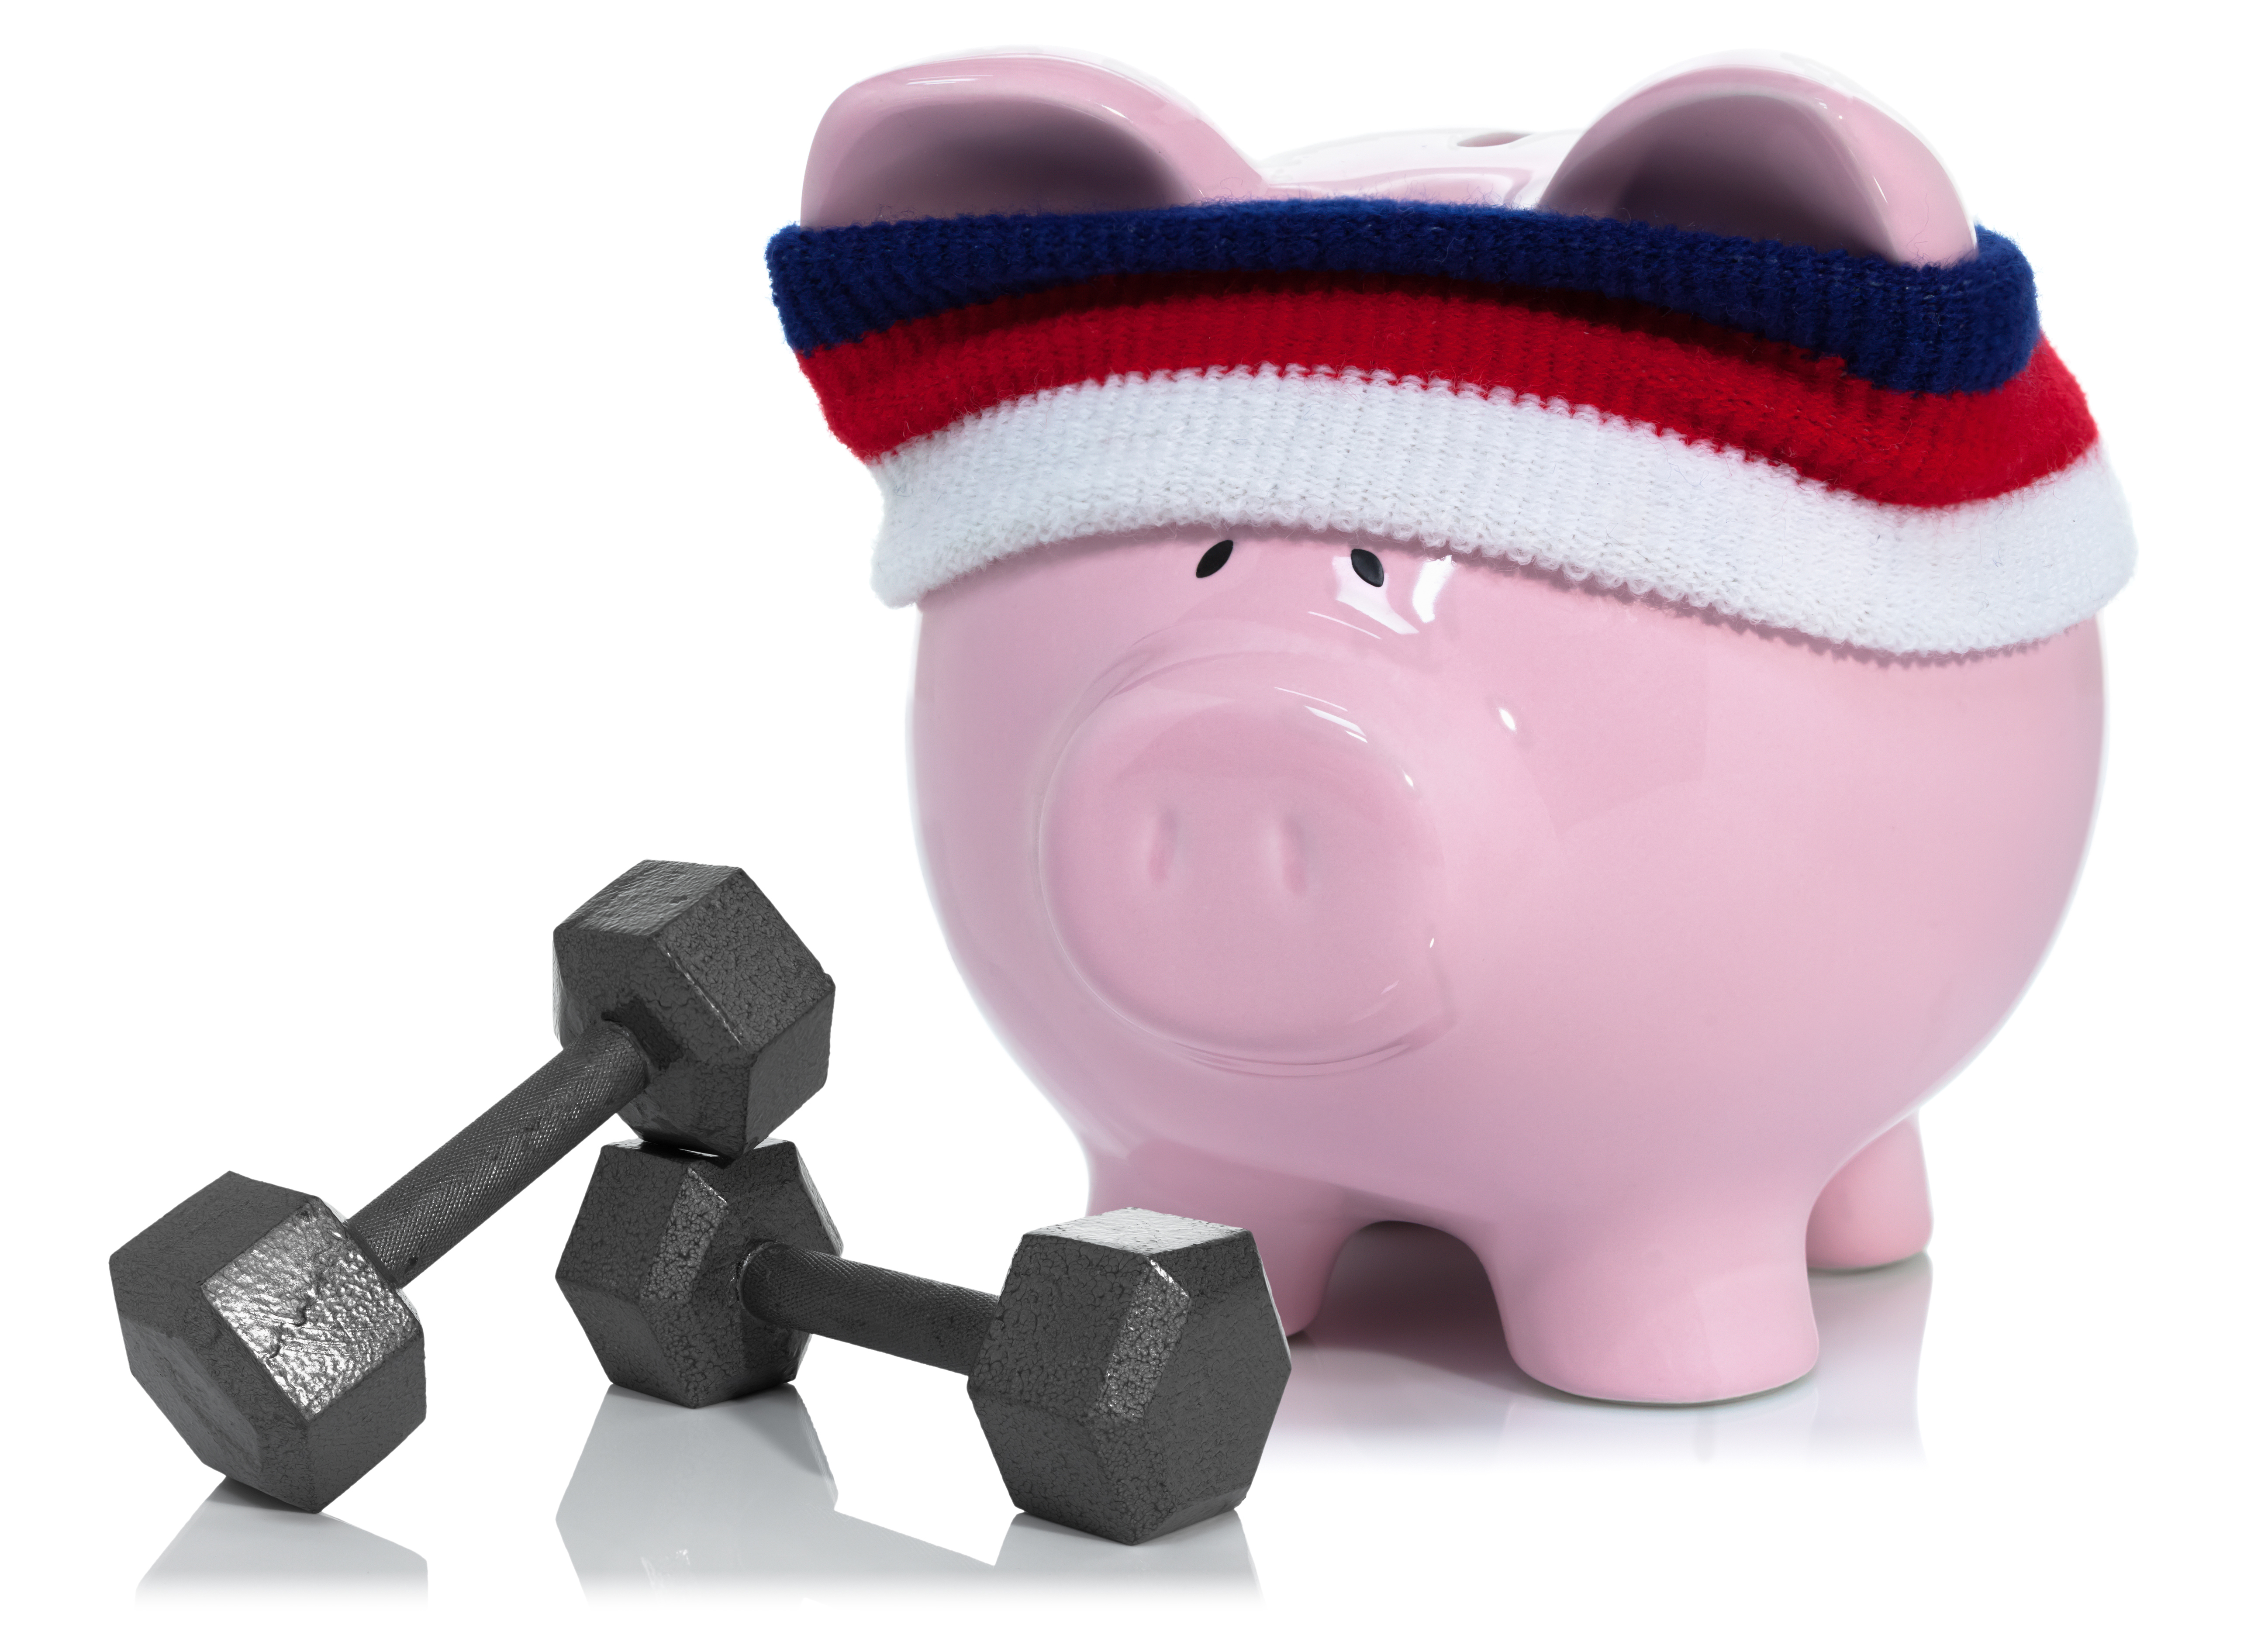 Piggy bank with workout gear